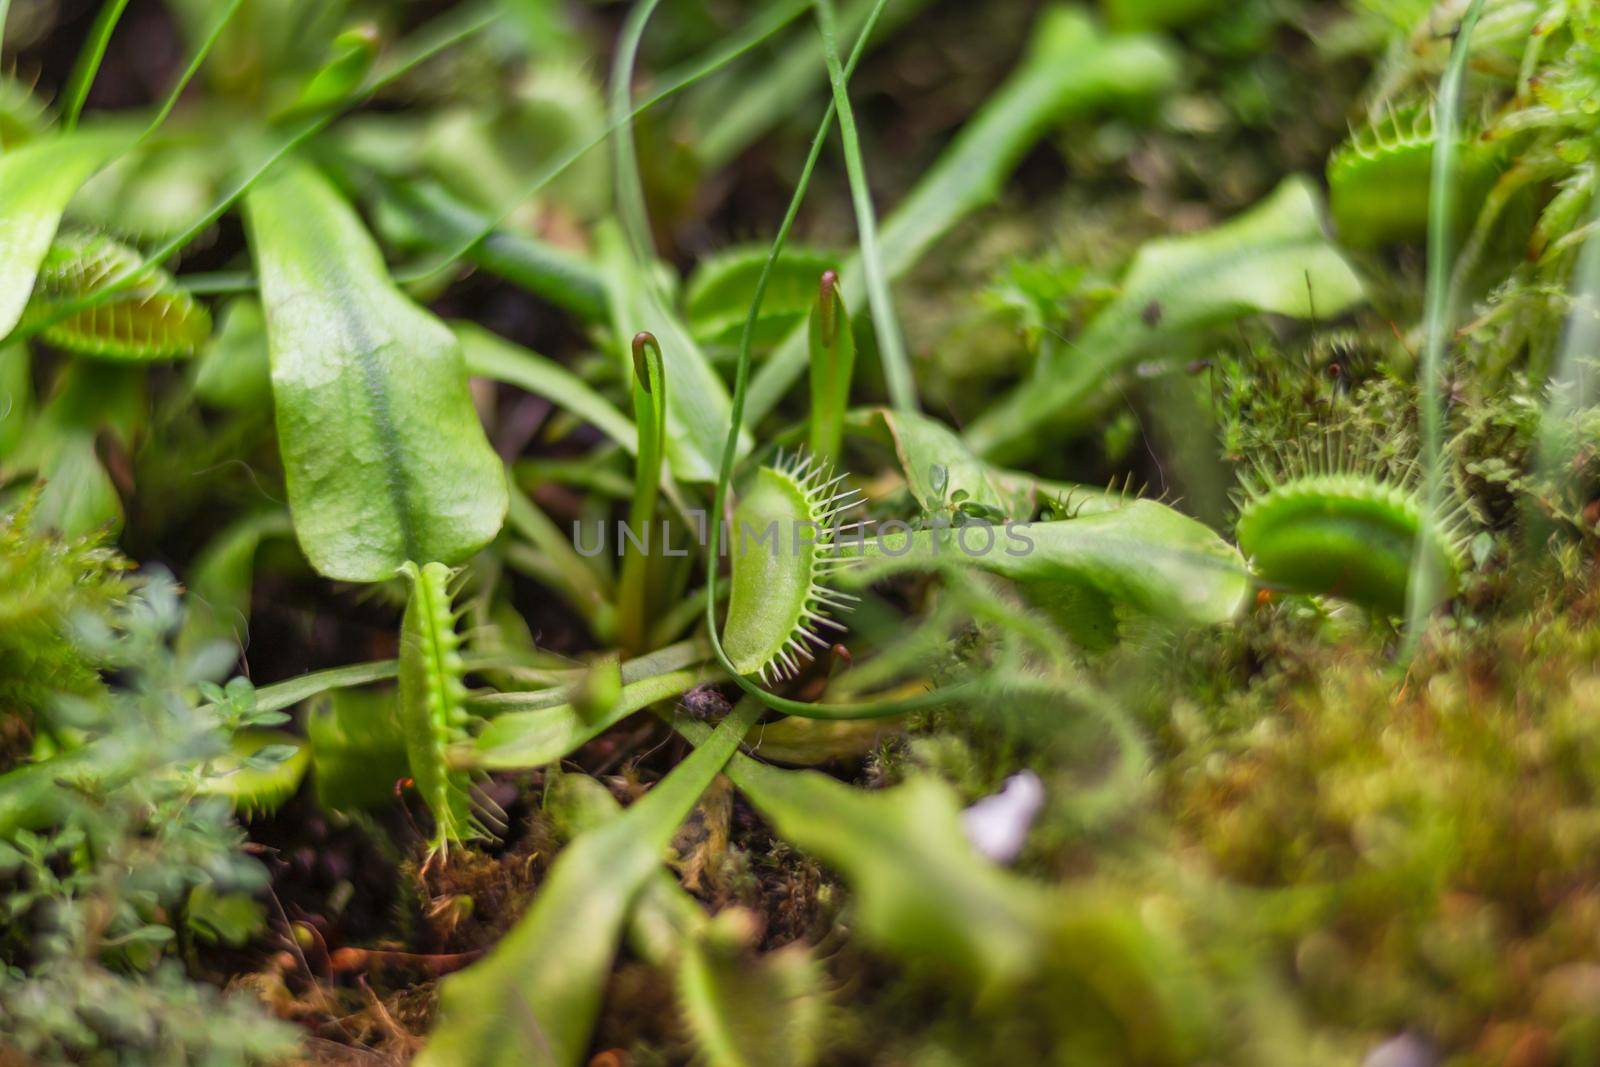 Venus flytrap or Dionaea muscipula, close up photo of carnivorous plant.